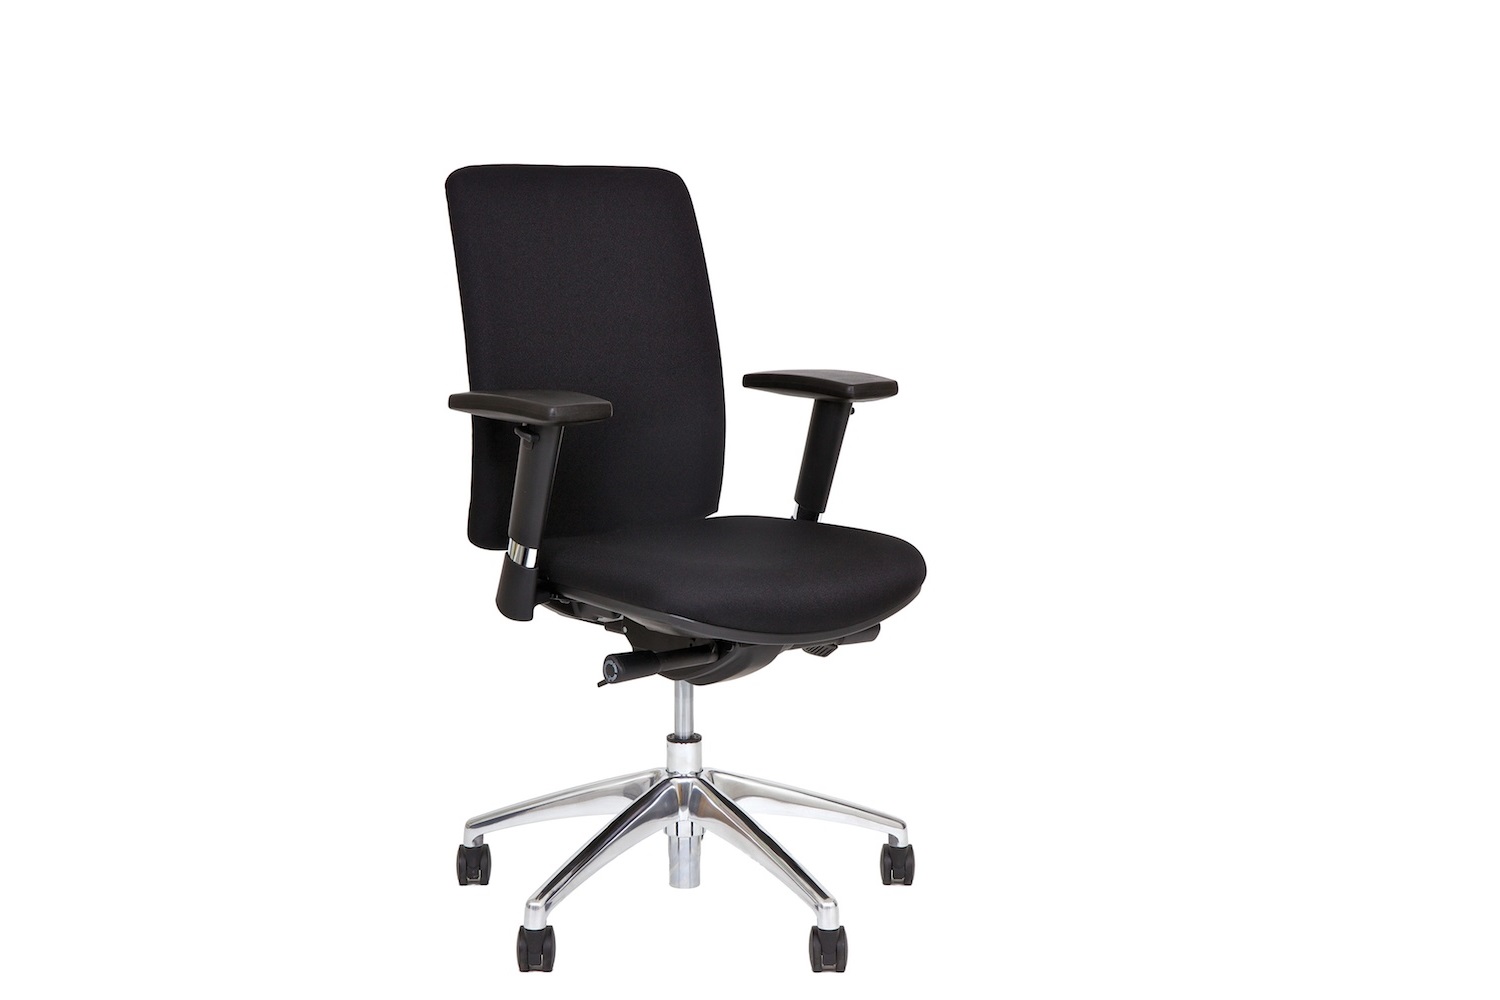 Office chair ergonomic 4